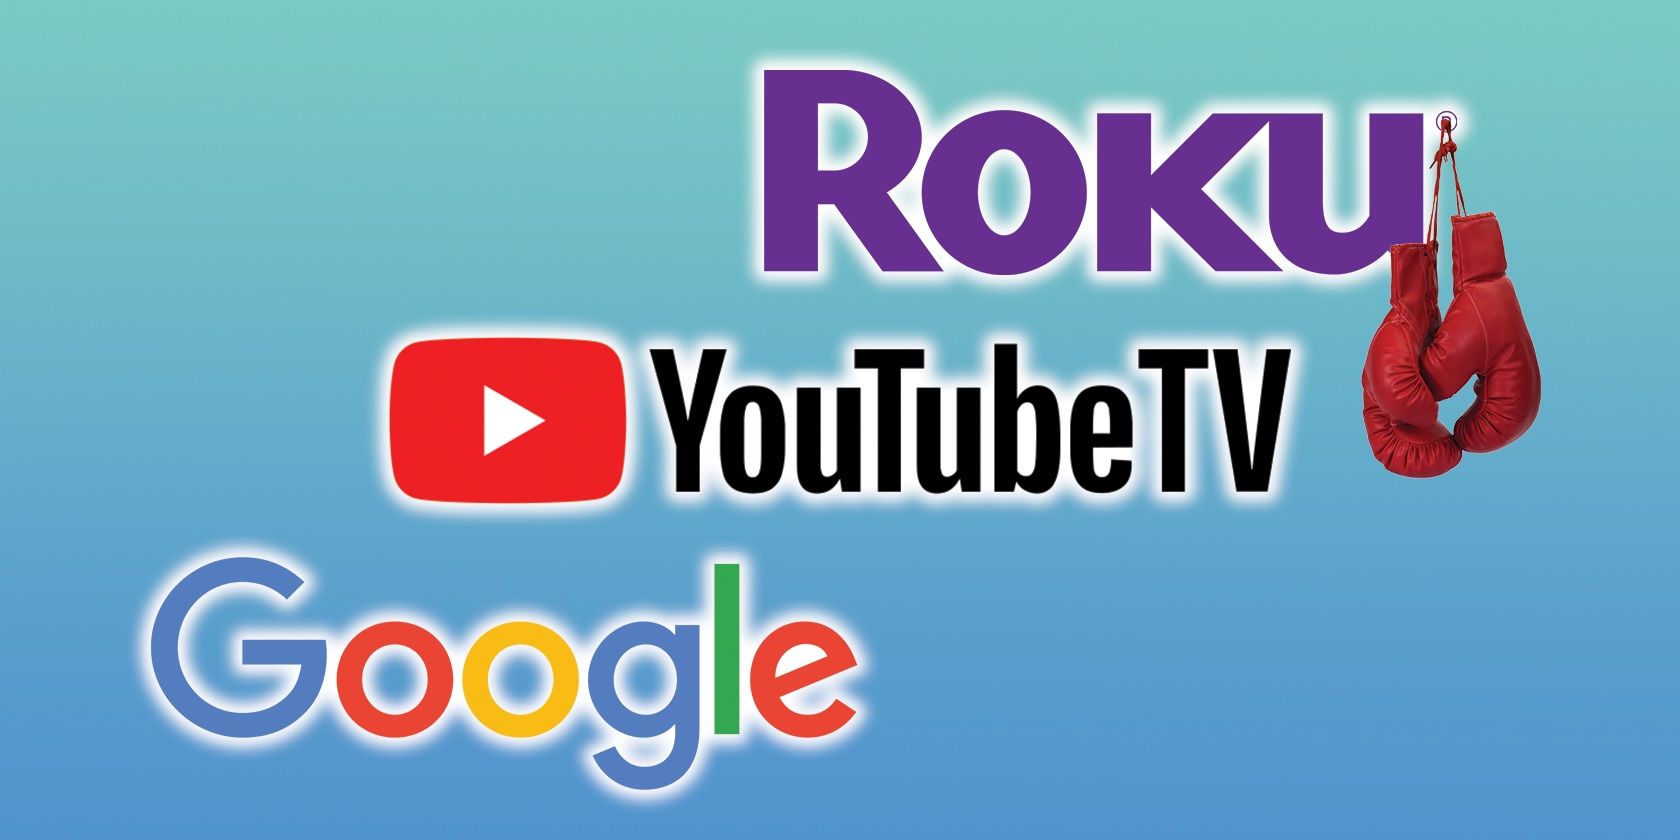 YouTube TV google Roku